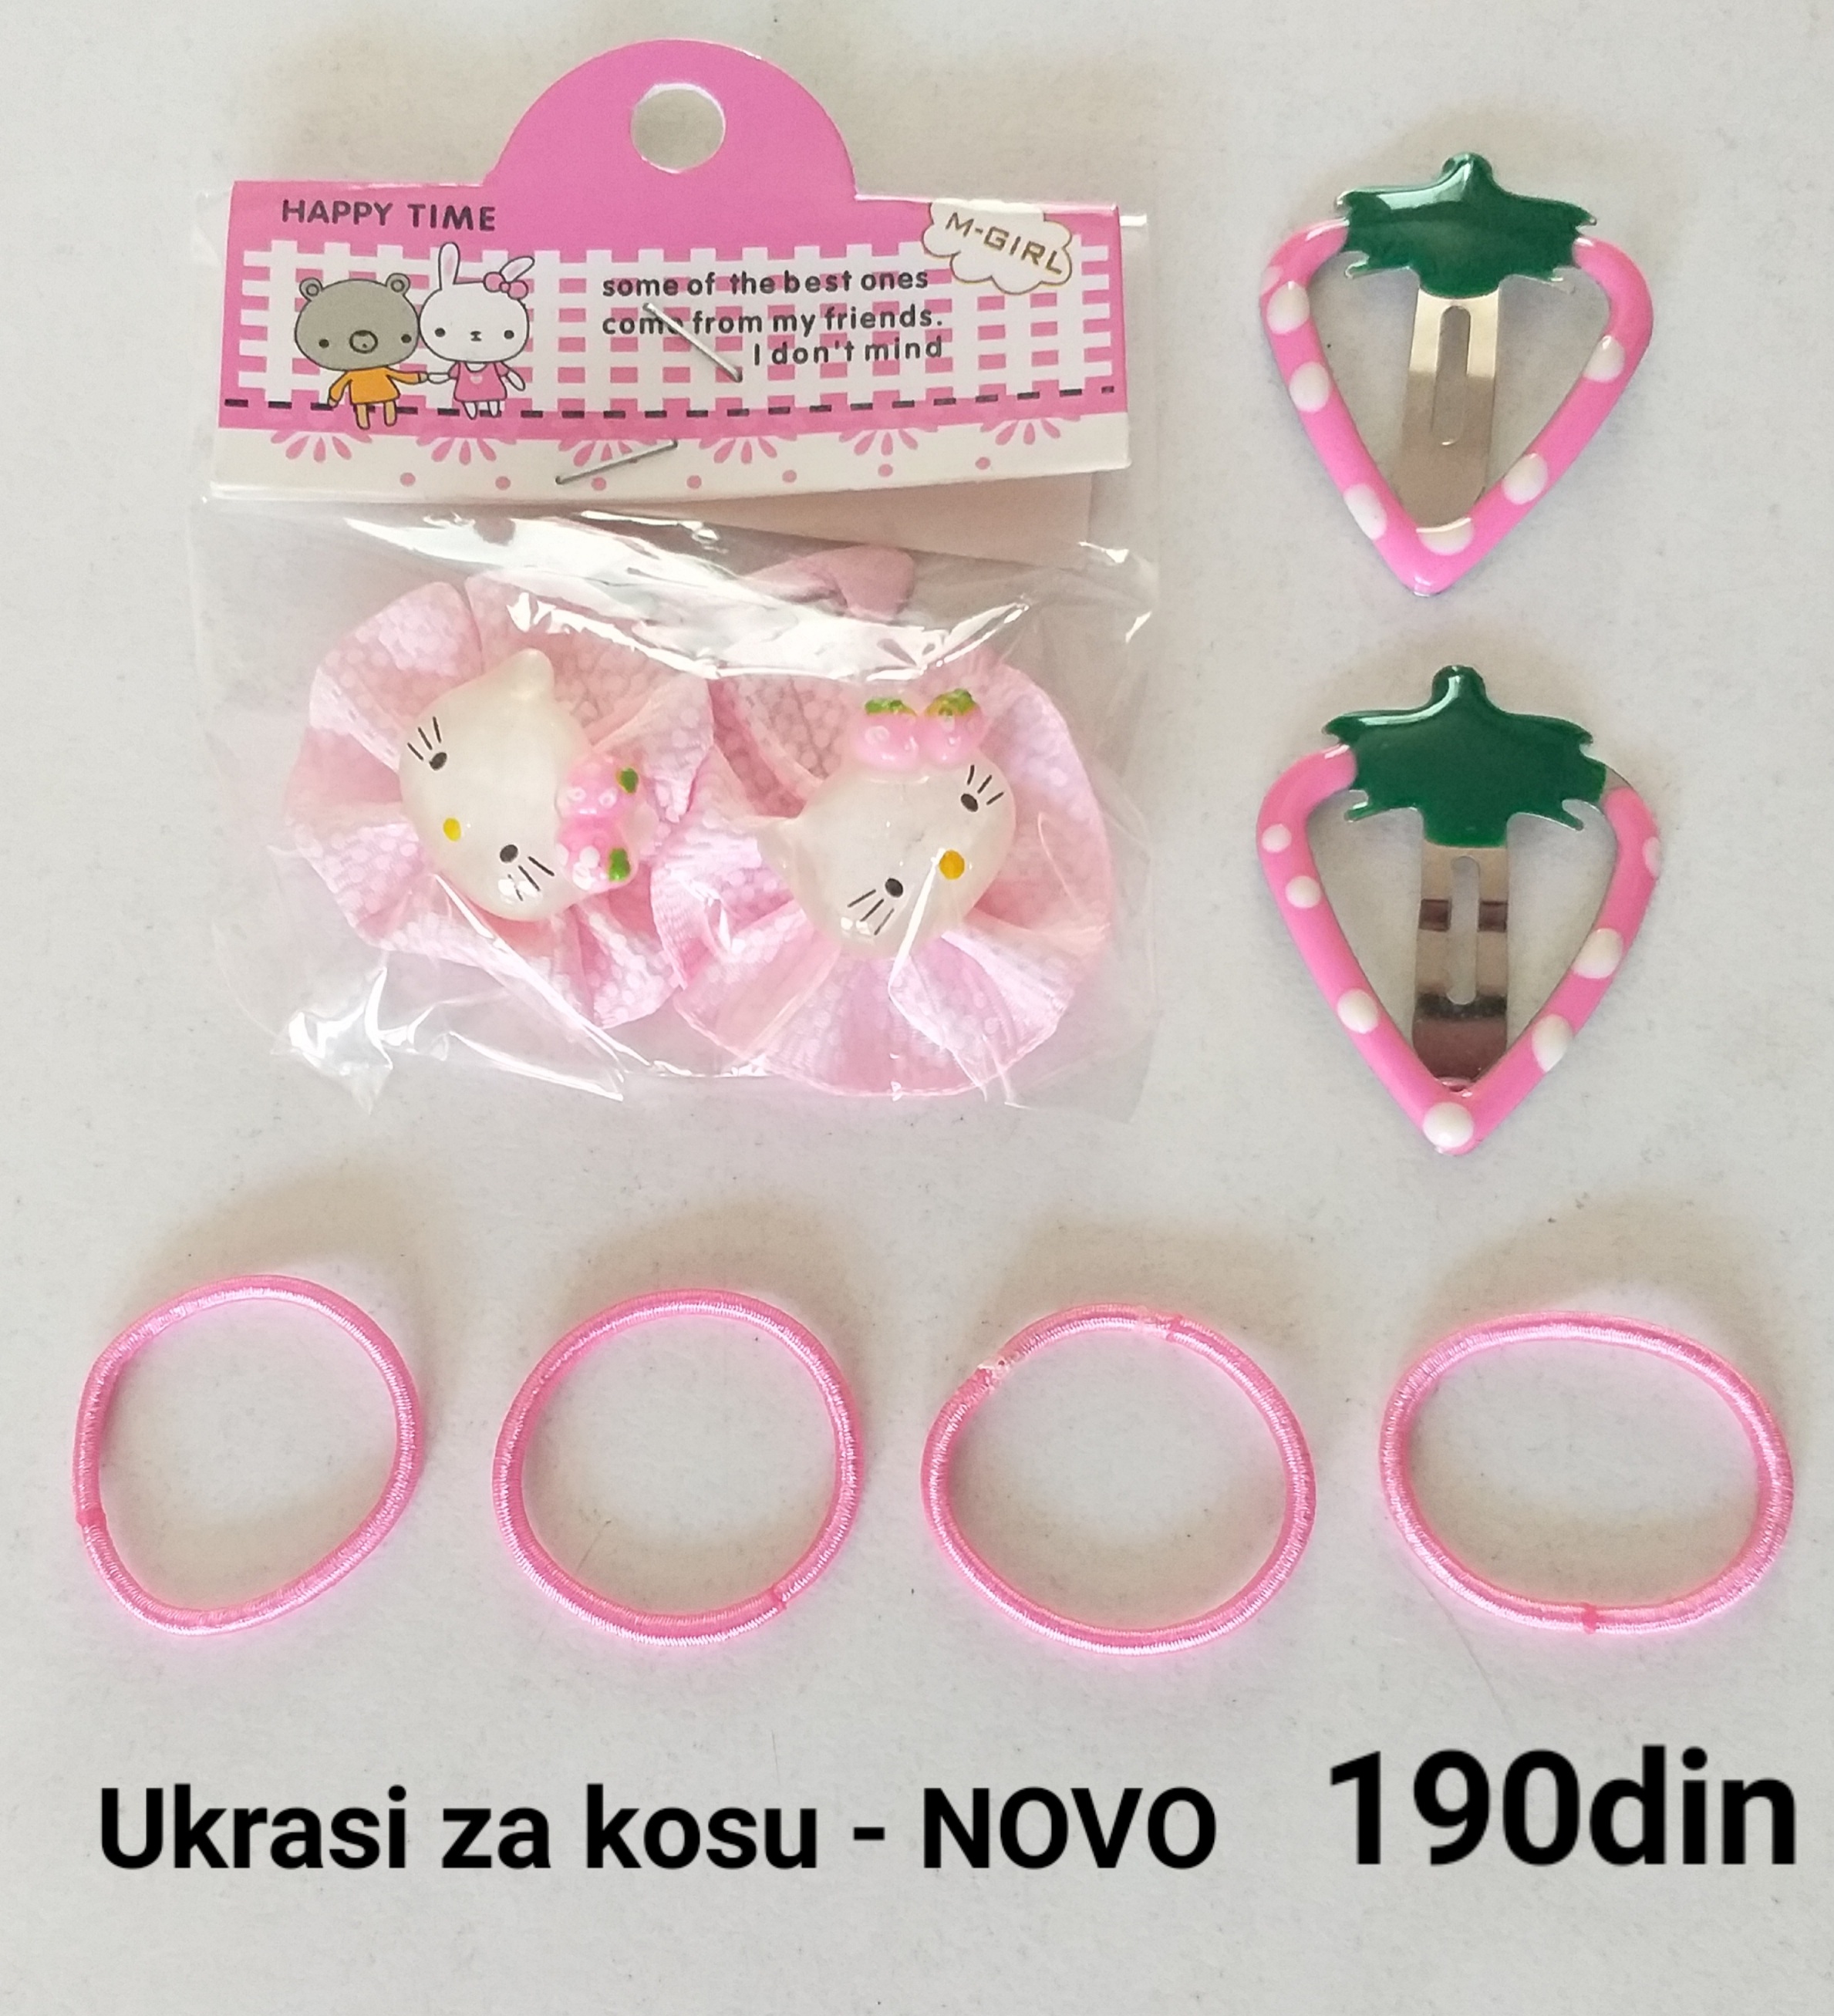 Ukrasi za kosu Hello Kitty - šnale i gumice - NOVO